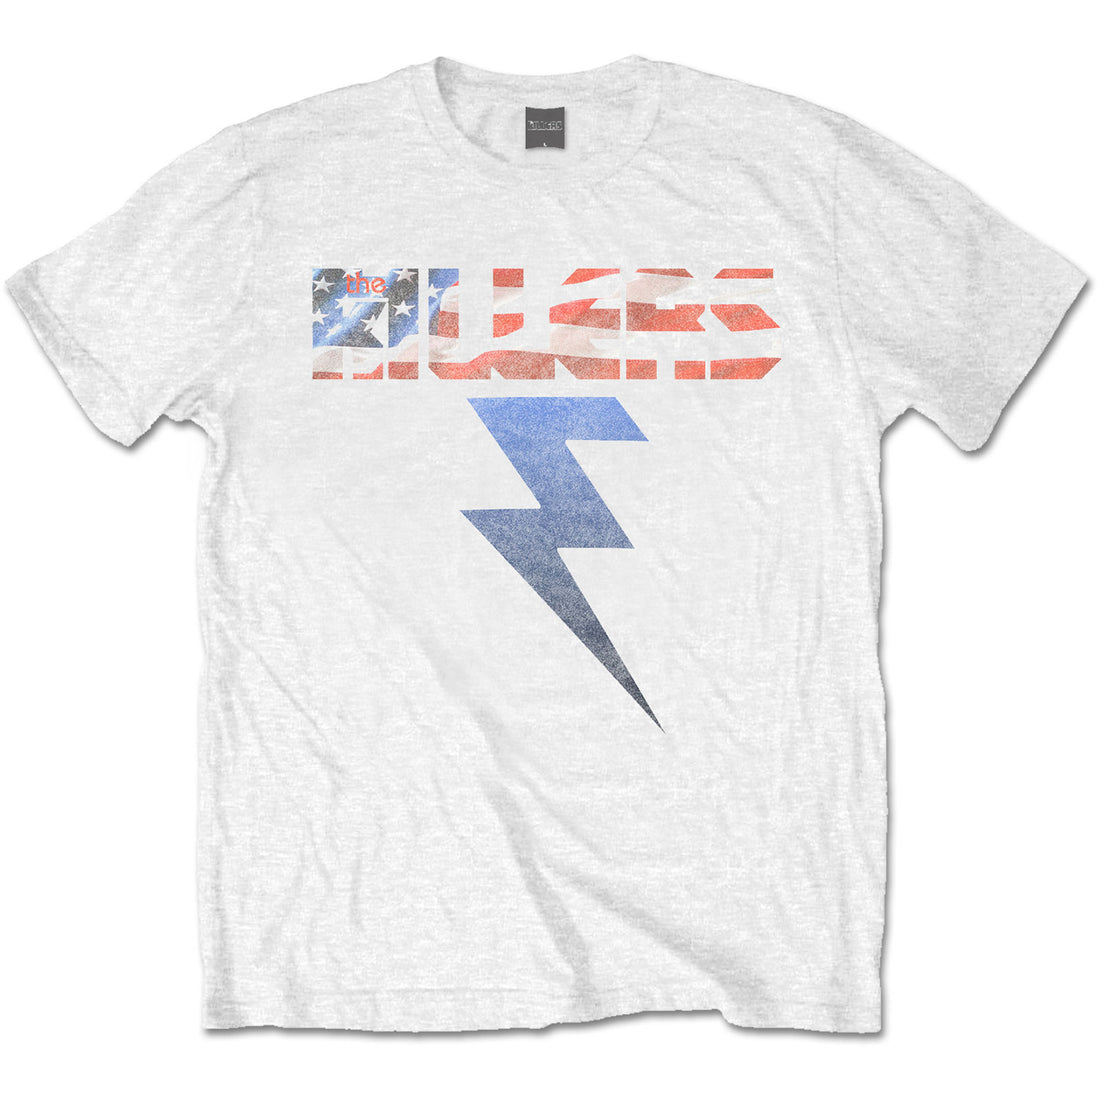 The Killers Unisex T-Shirt: Bolt